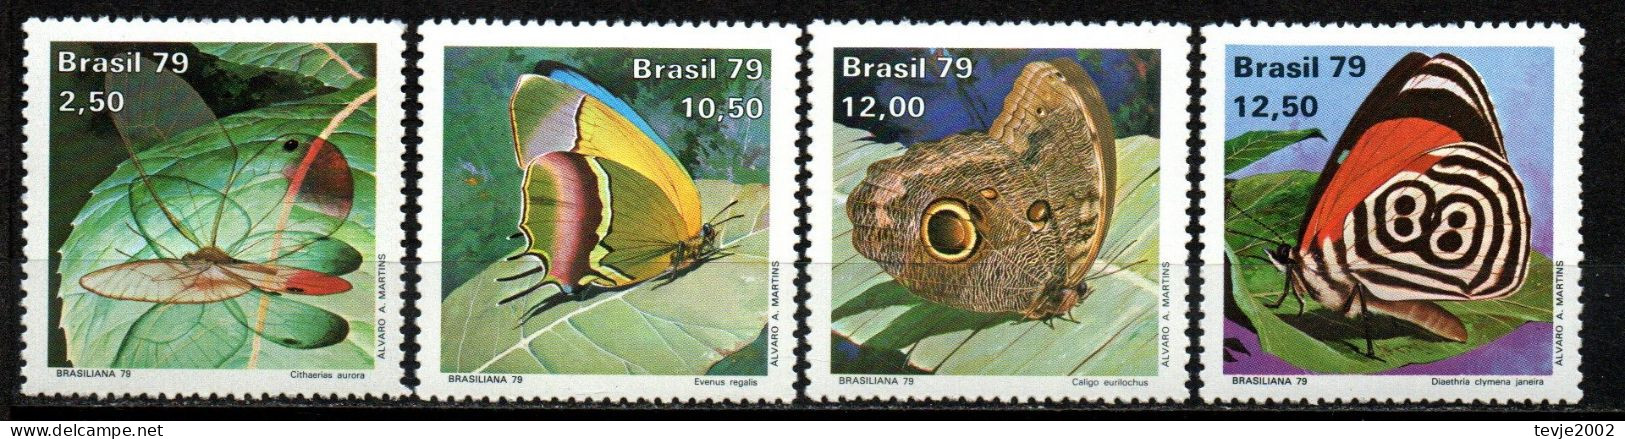 Brasilien 1979 - Mi.Nr. 1716 - 1719 - Postfrisch MNH - Tiere Animals Schmetterlinge Butterflies - Butterflies